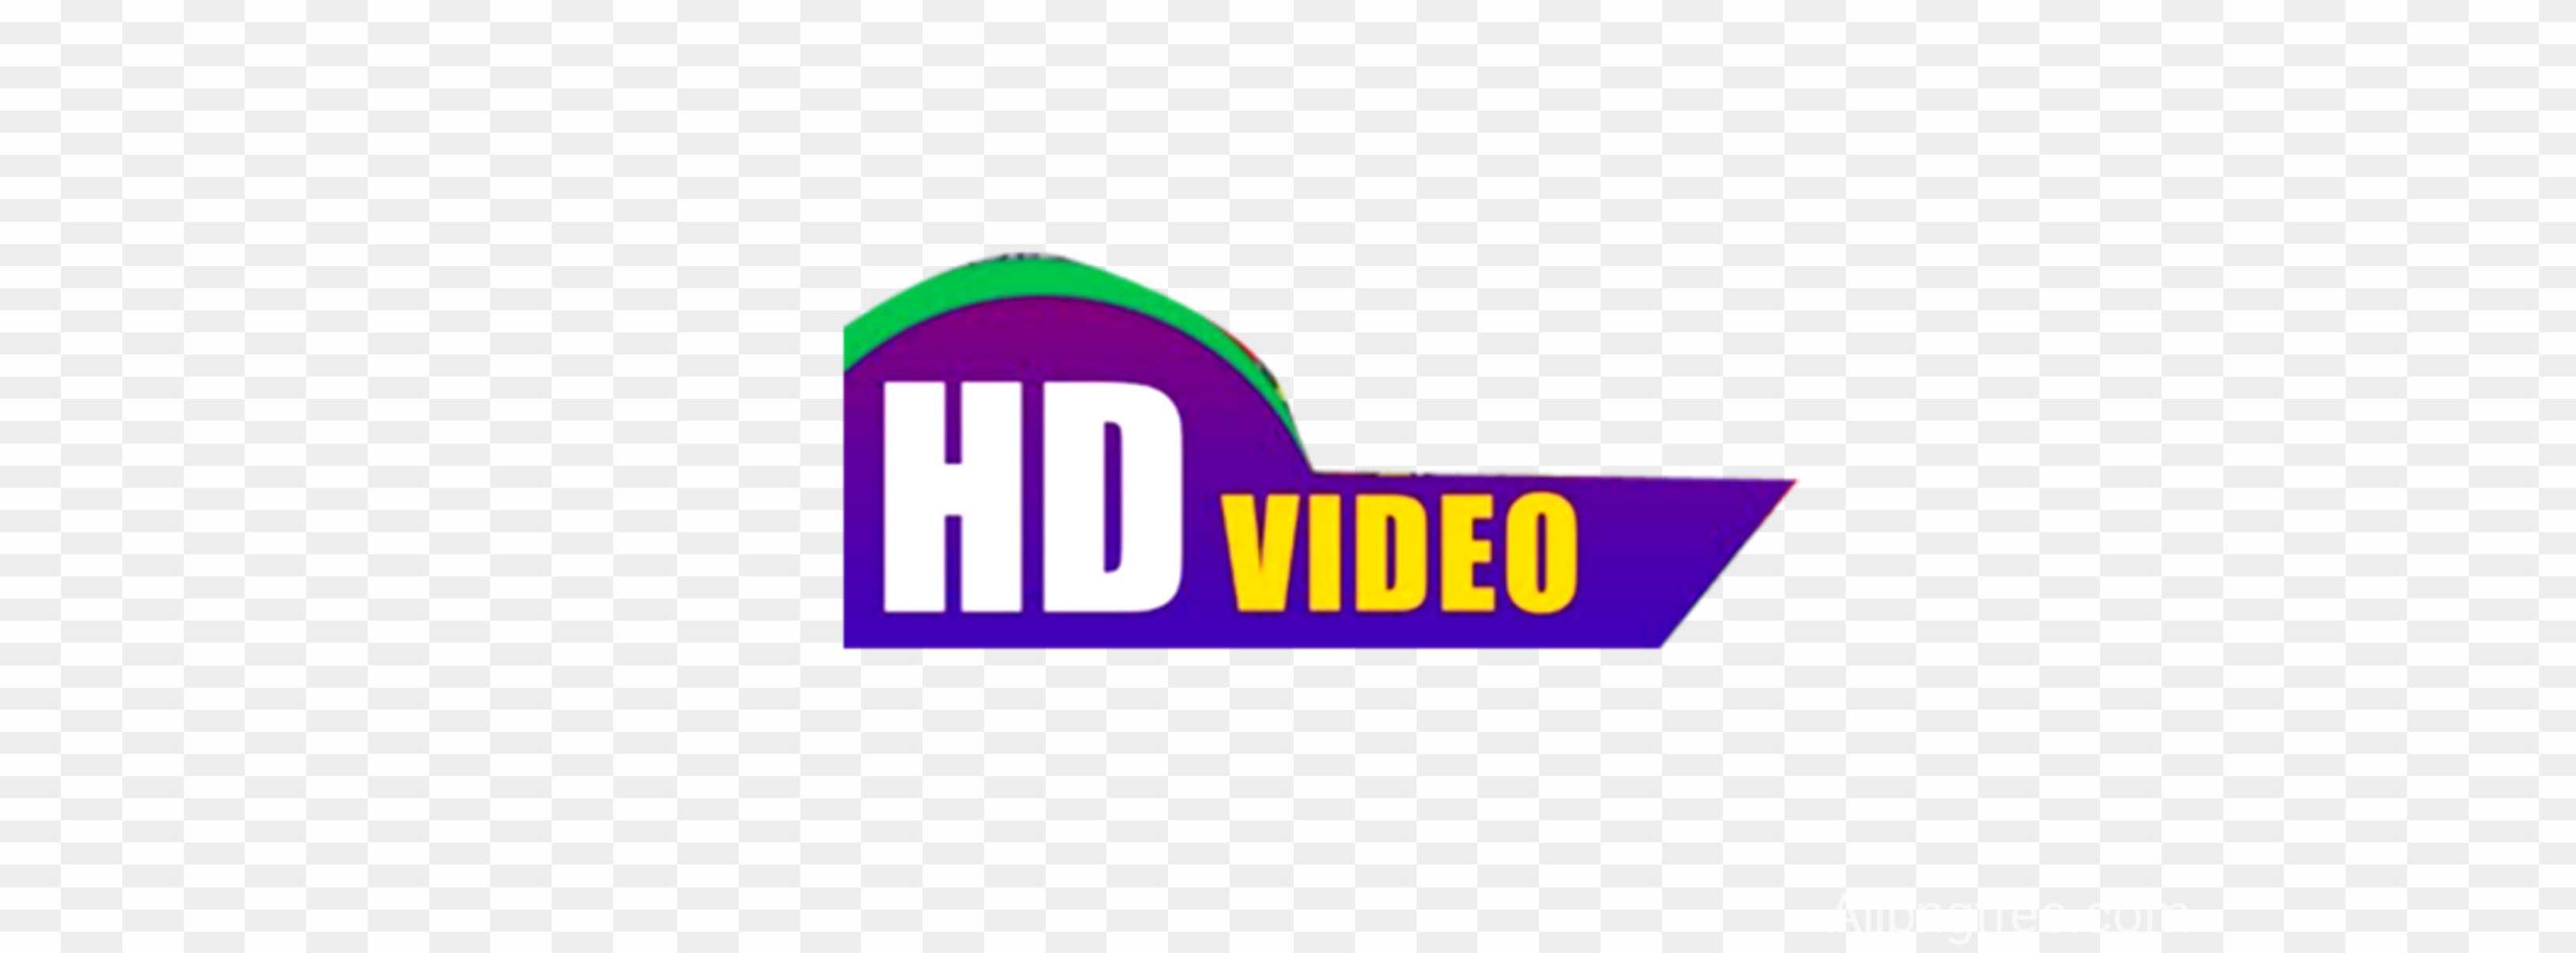 Warner Home Video HD Logo (DVD Variant) by Charlieaat on DeviantArt